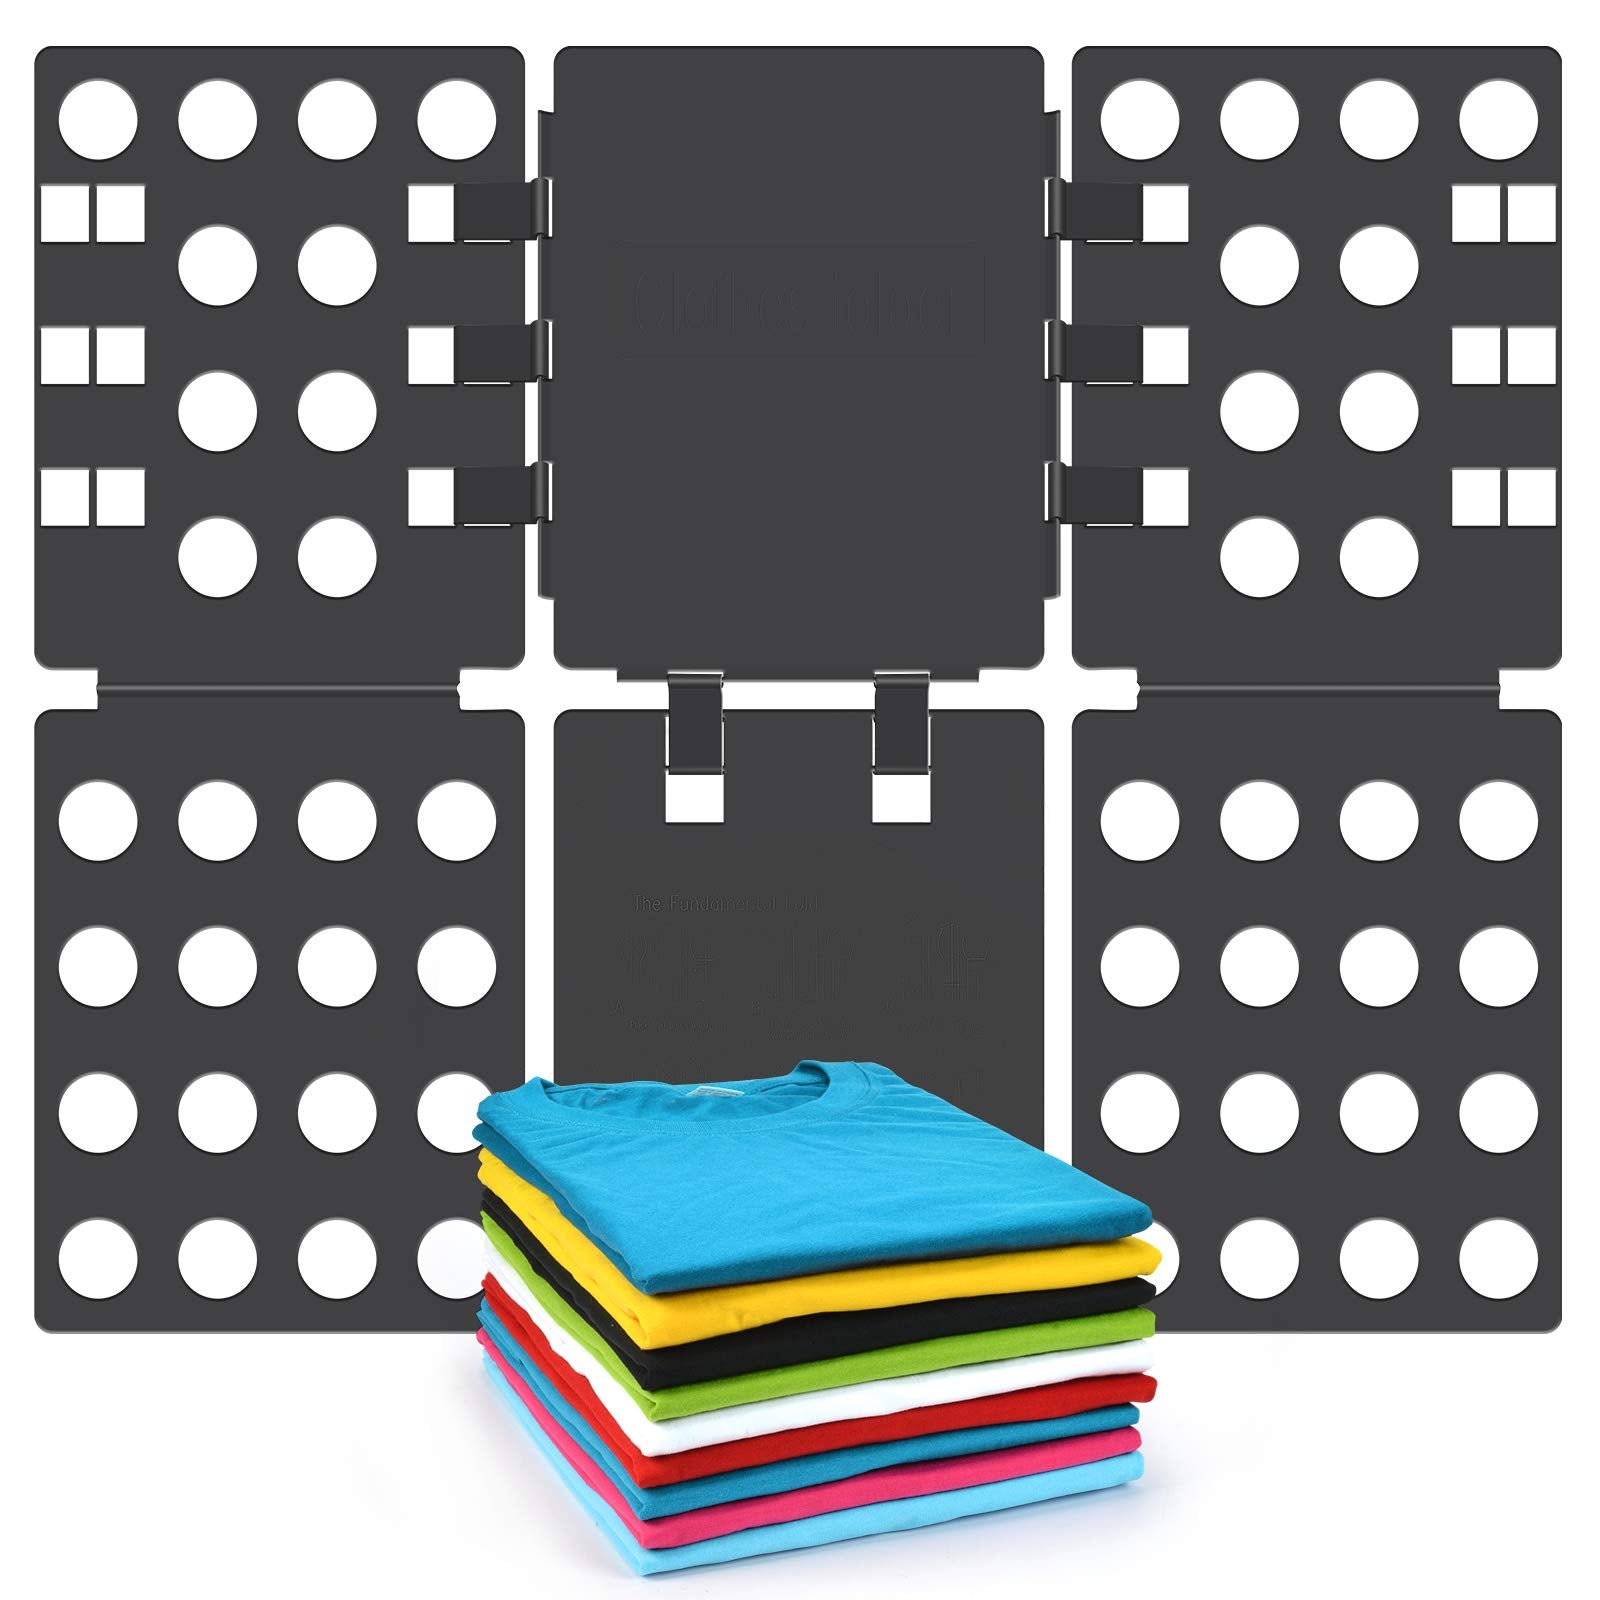 Kid And Adults Shirt Folder Tshirt Folding Board (Black,Red) – BoxLegend